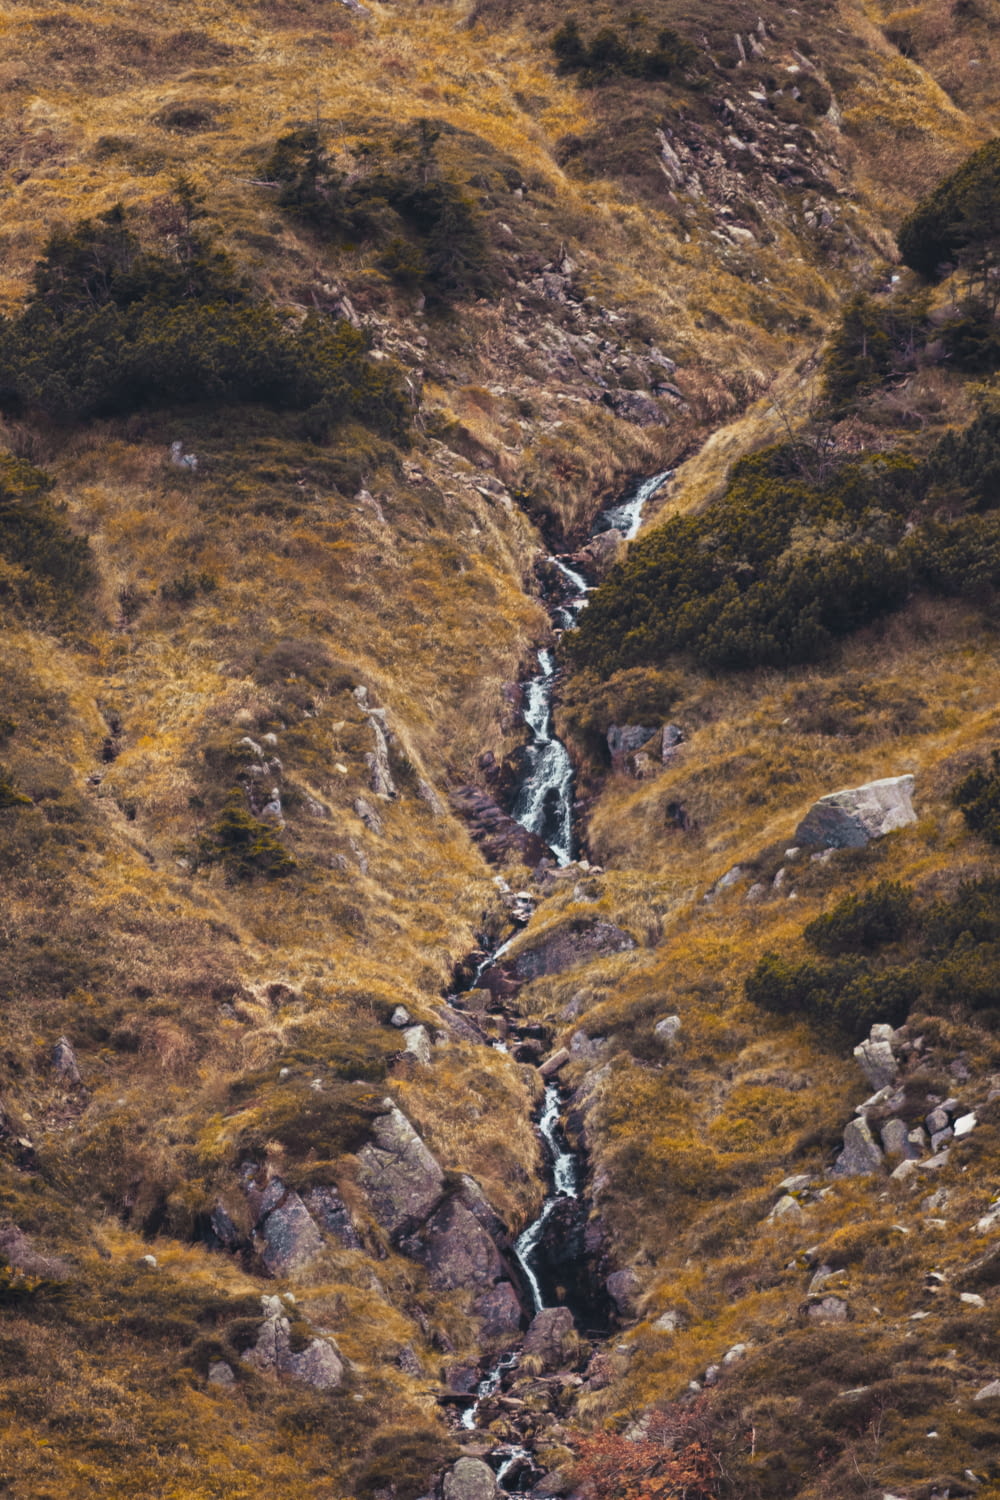 a stream of water running down a grassy hillside